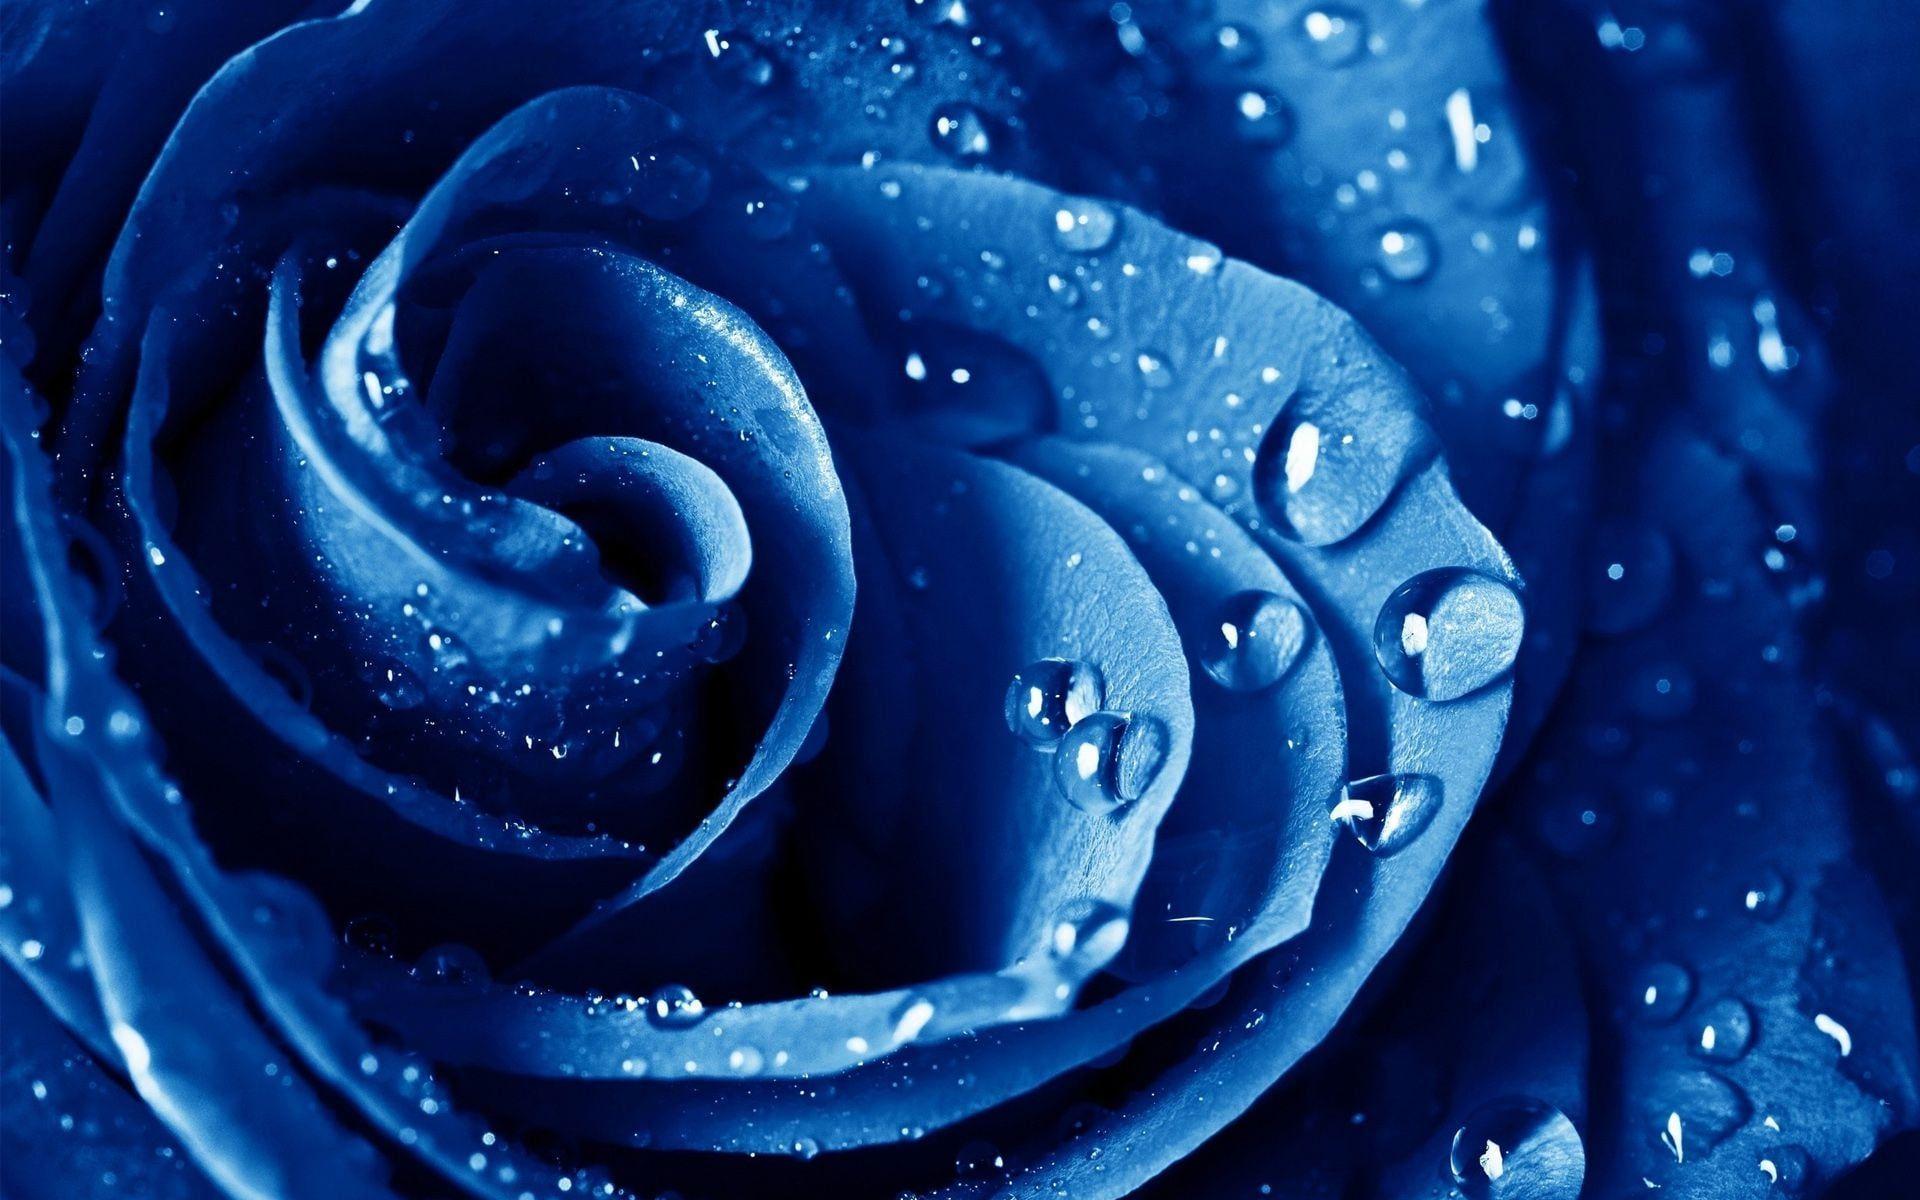 Blue Rose wallpaper HD free Download